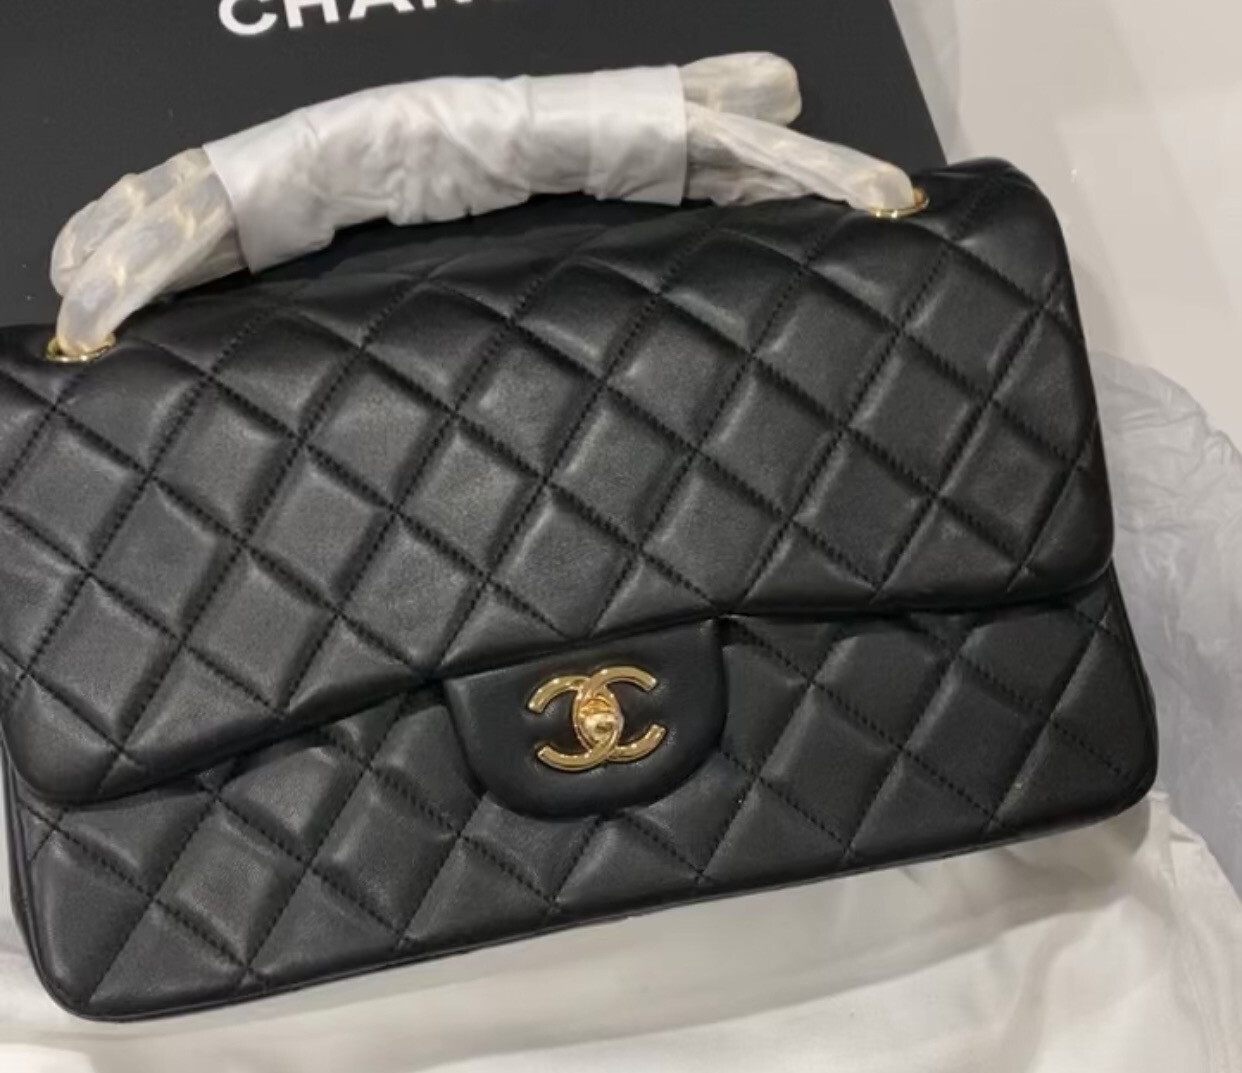 PRE ORDER - 1:1 Chanel Classic JUMBO Double Flap Bag - NUDE Lambskin SILVER hardware